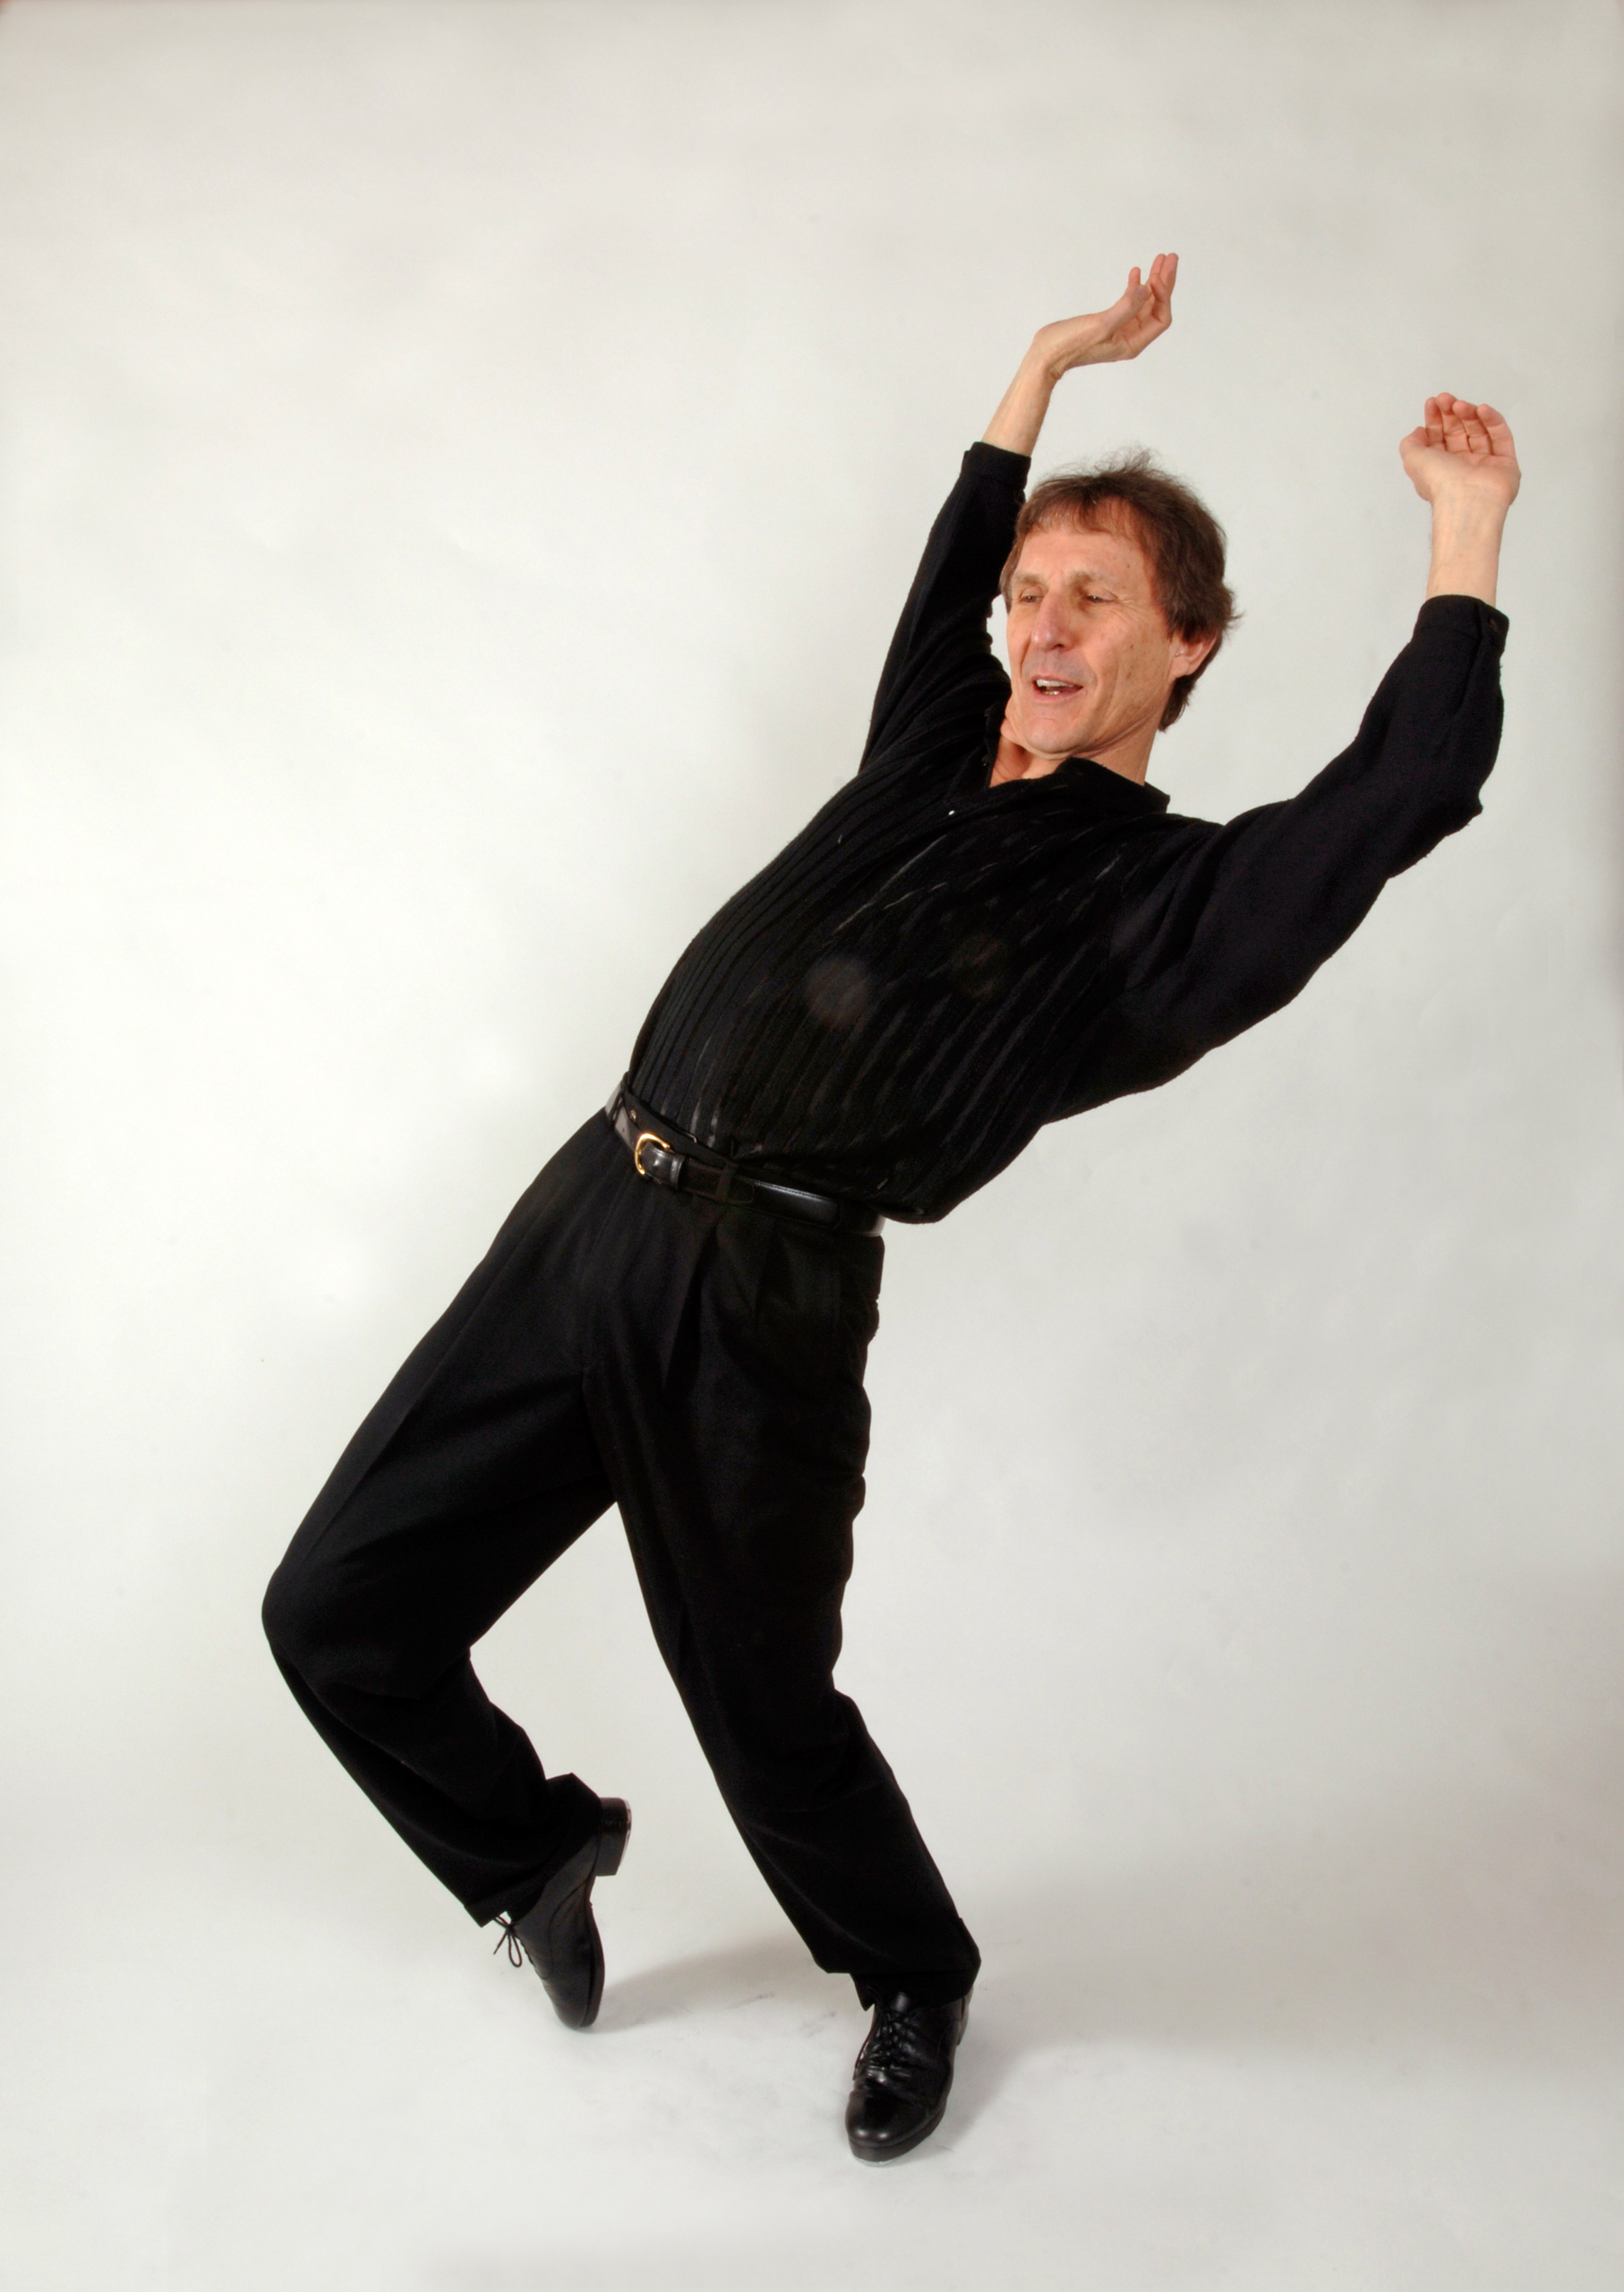 Bill Evans, in a studio photograph dance pose, dressed black